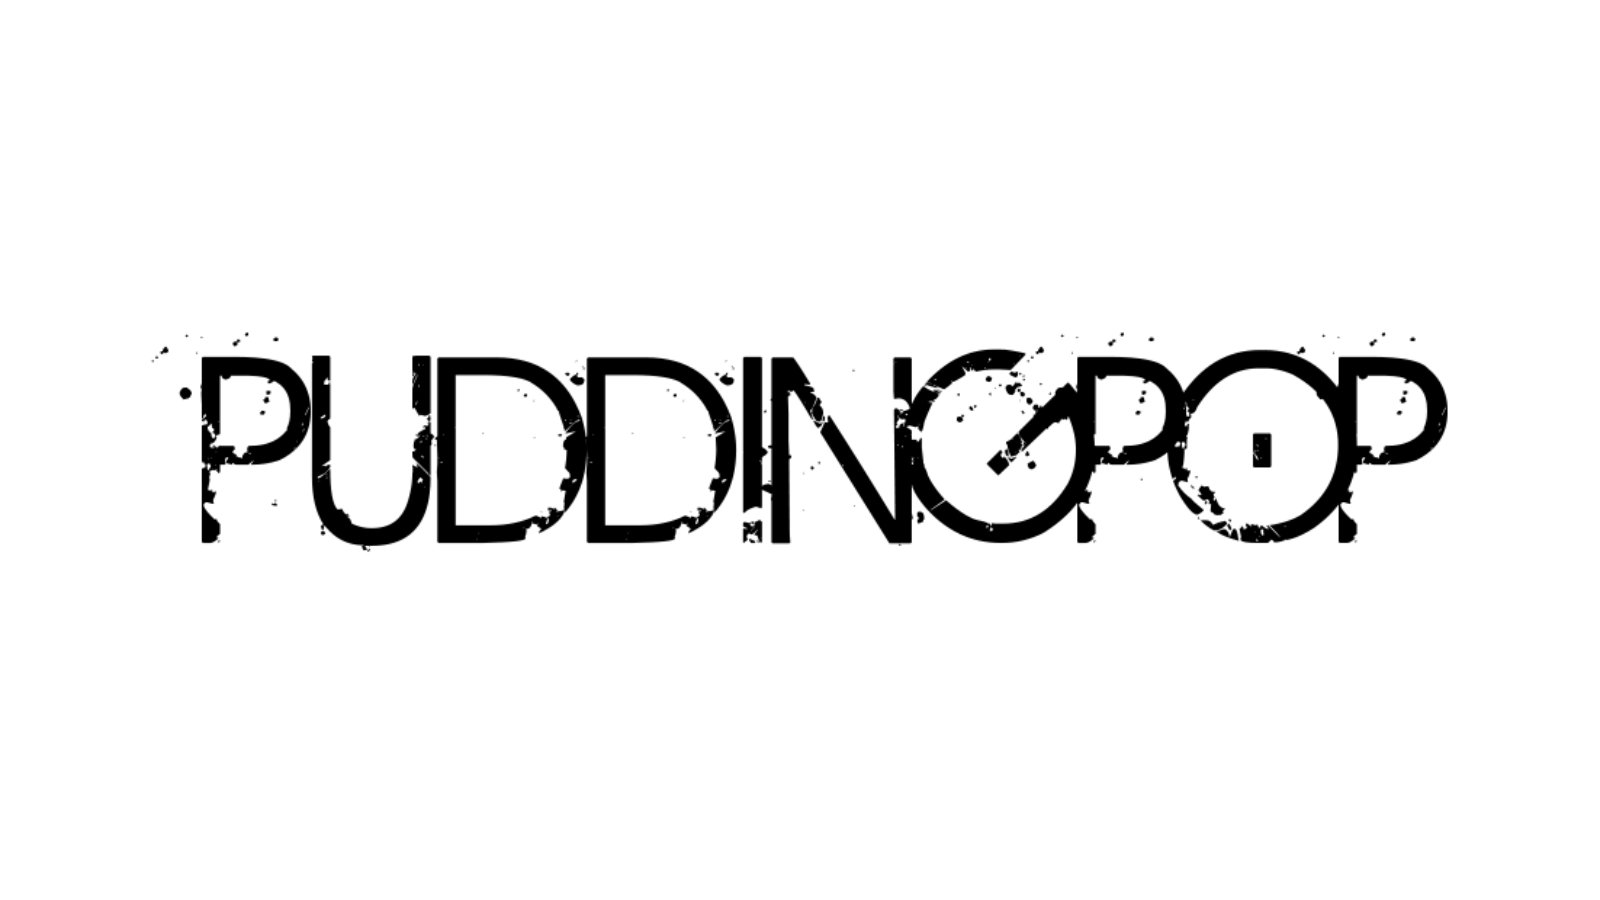 Puddingpop